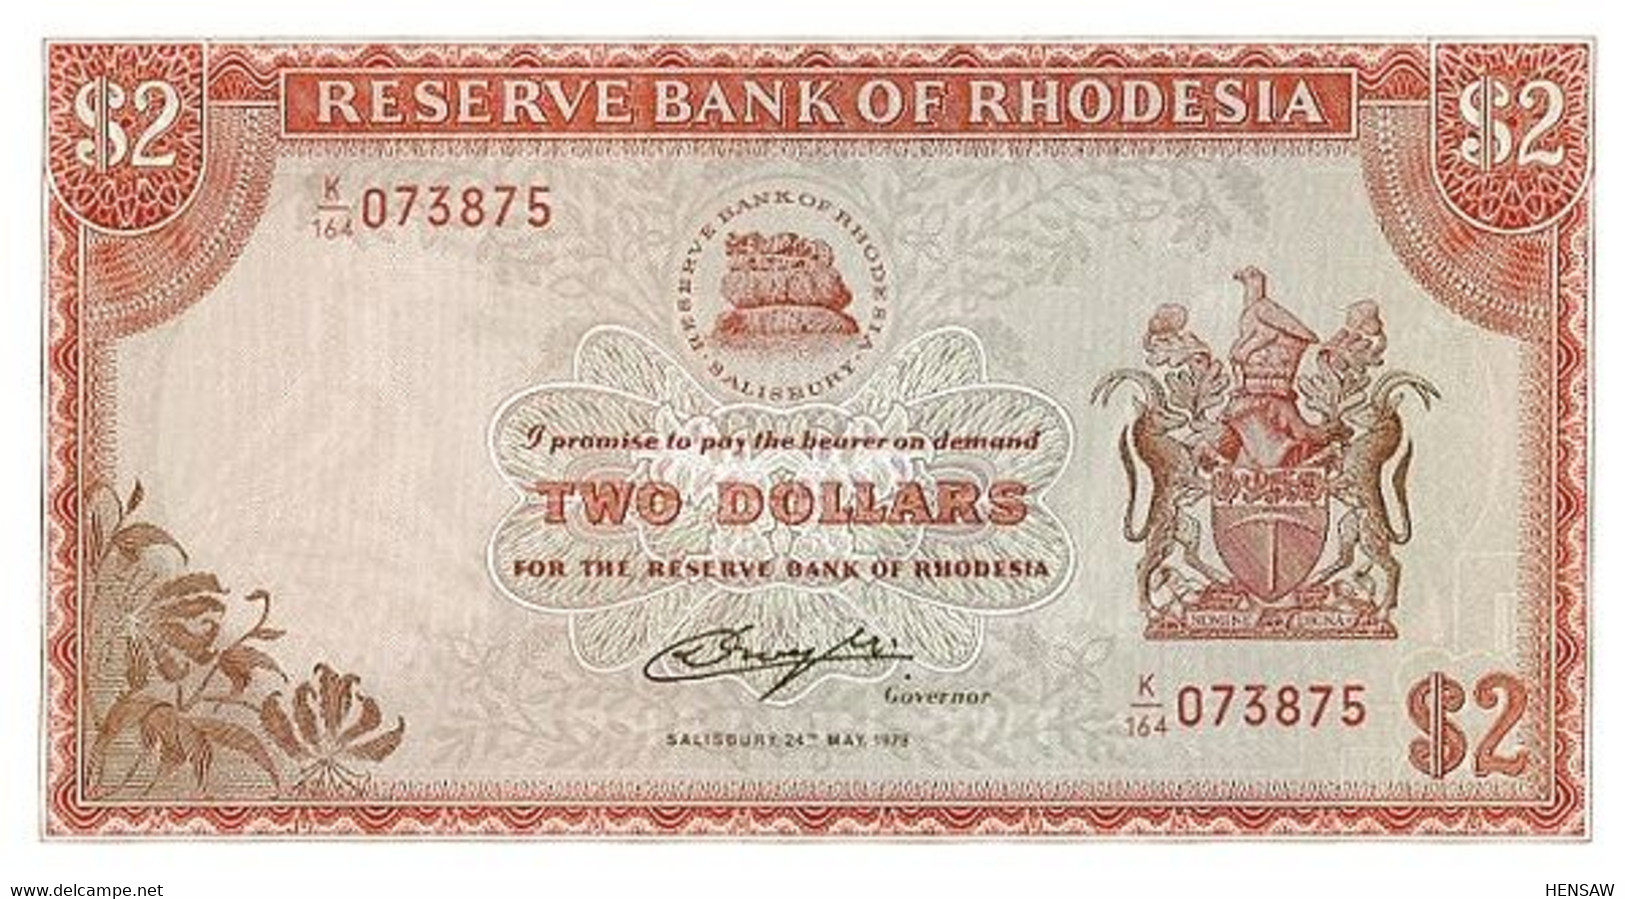 RHODESIA 2 DOLLARS 1979 P 39 UNC SC NUEVO - Rhodesien